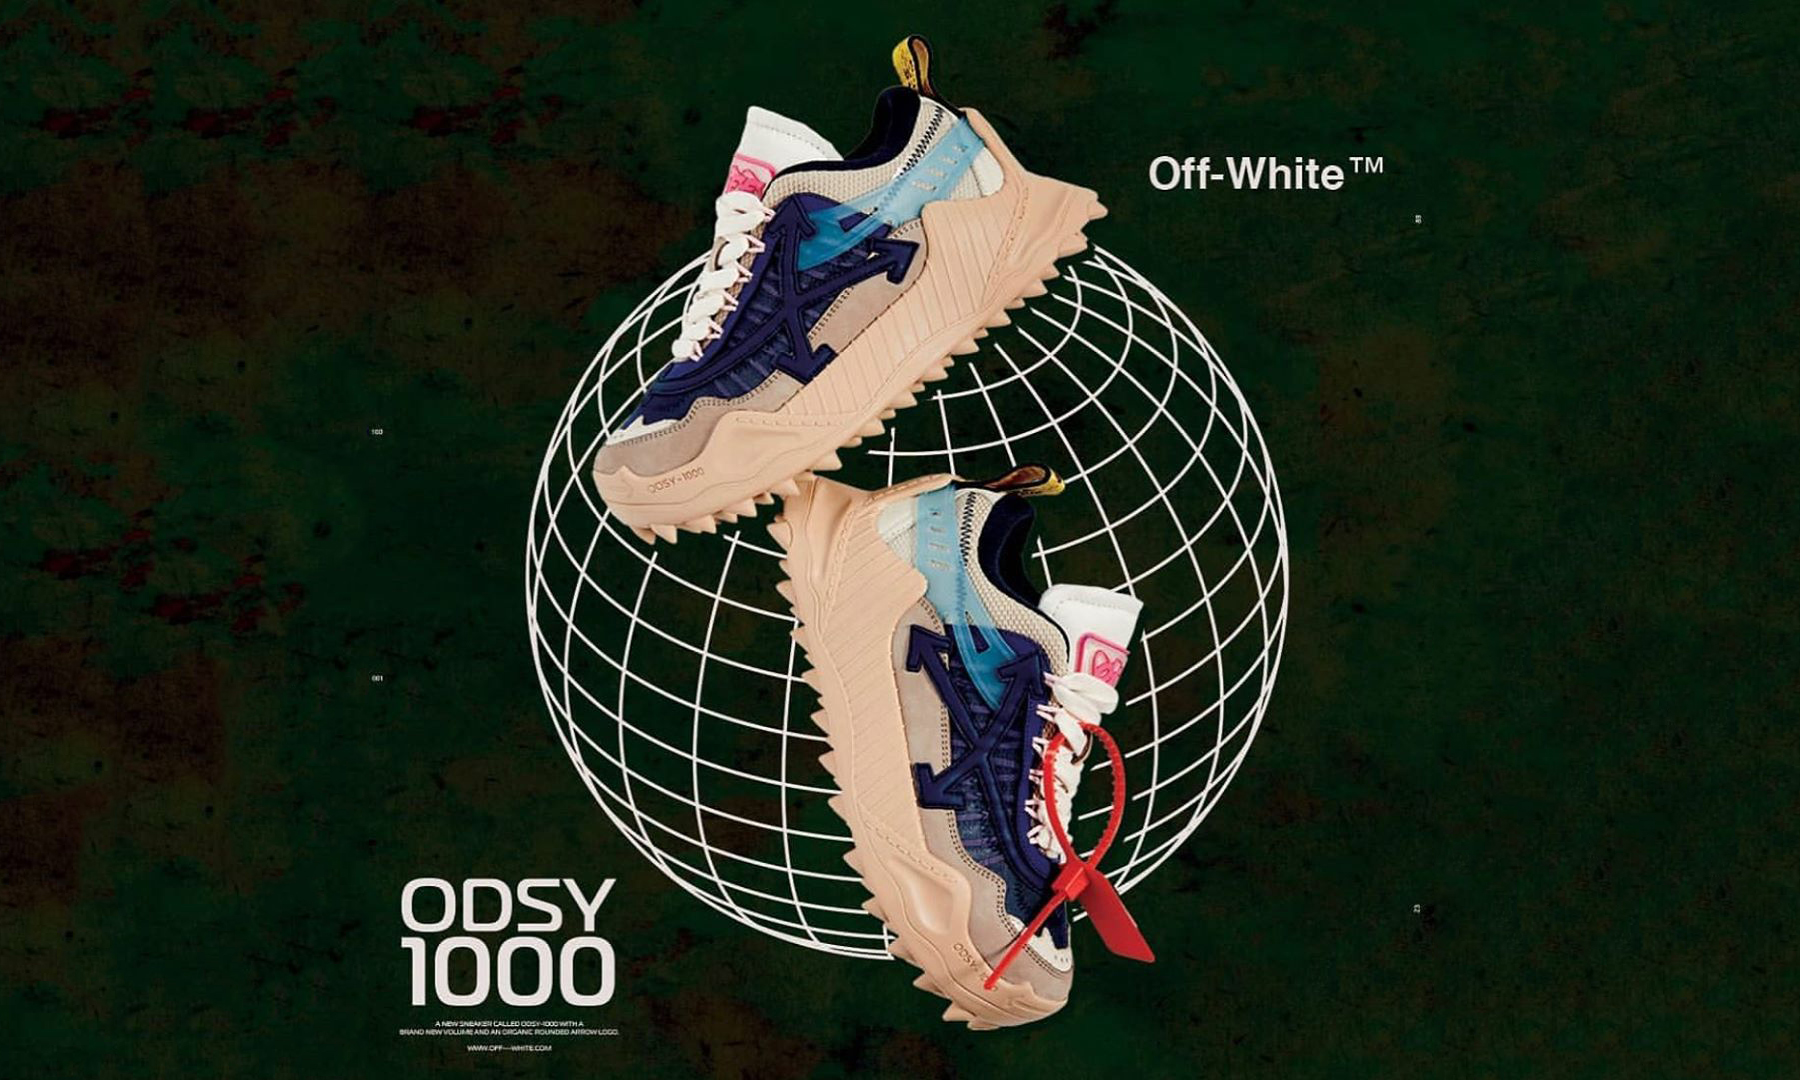 Off-White™ “ODSY-1000” Sneakers 现已上架开售